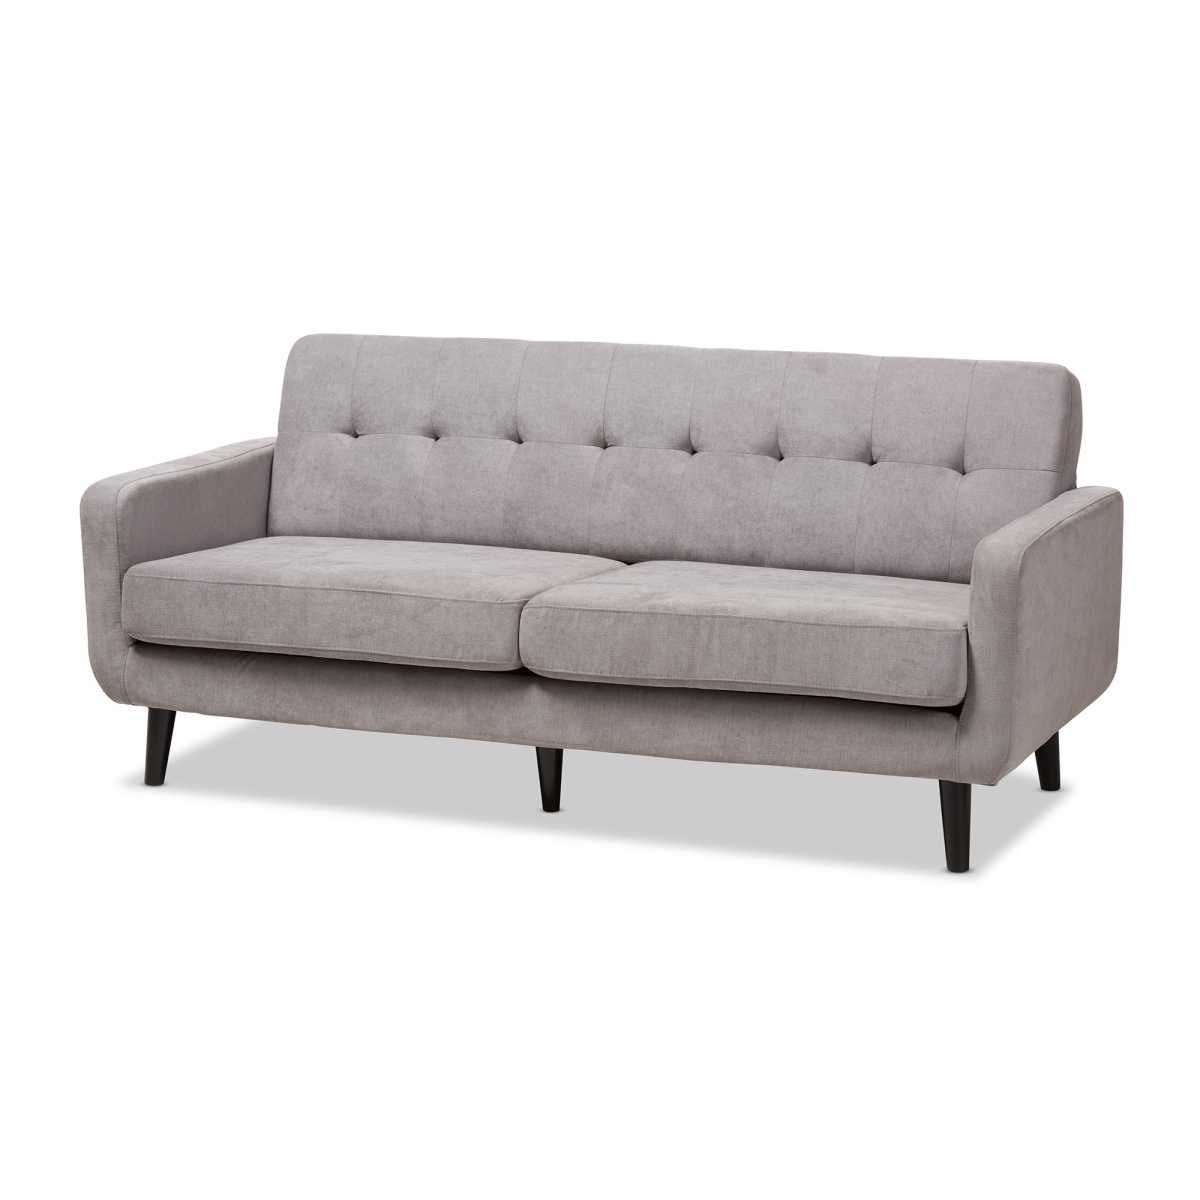 R2017-grey-sf Carina Mid-century Modern Sofa, Light Grey